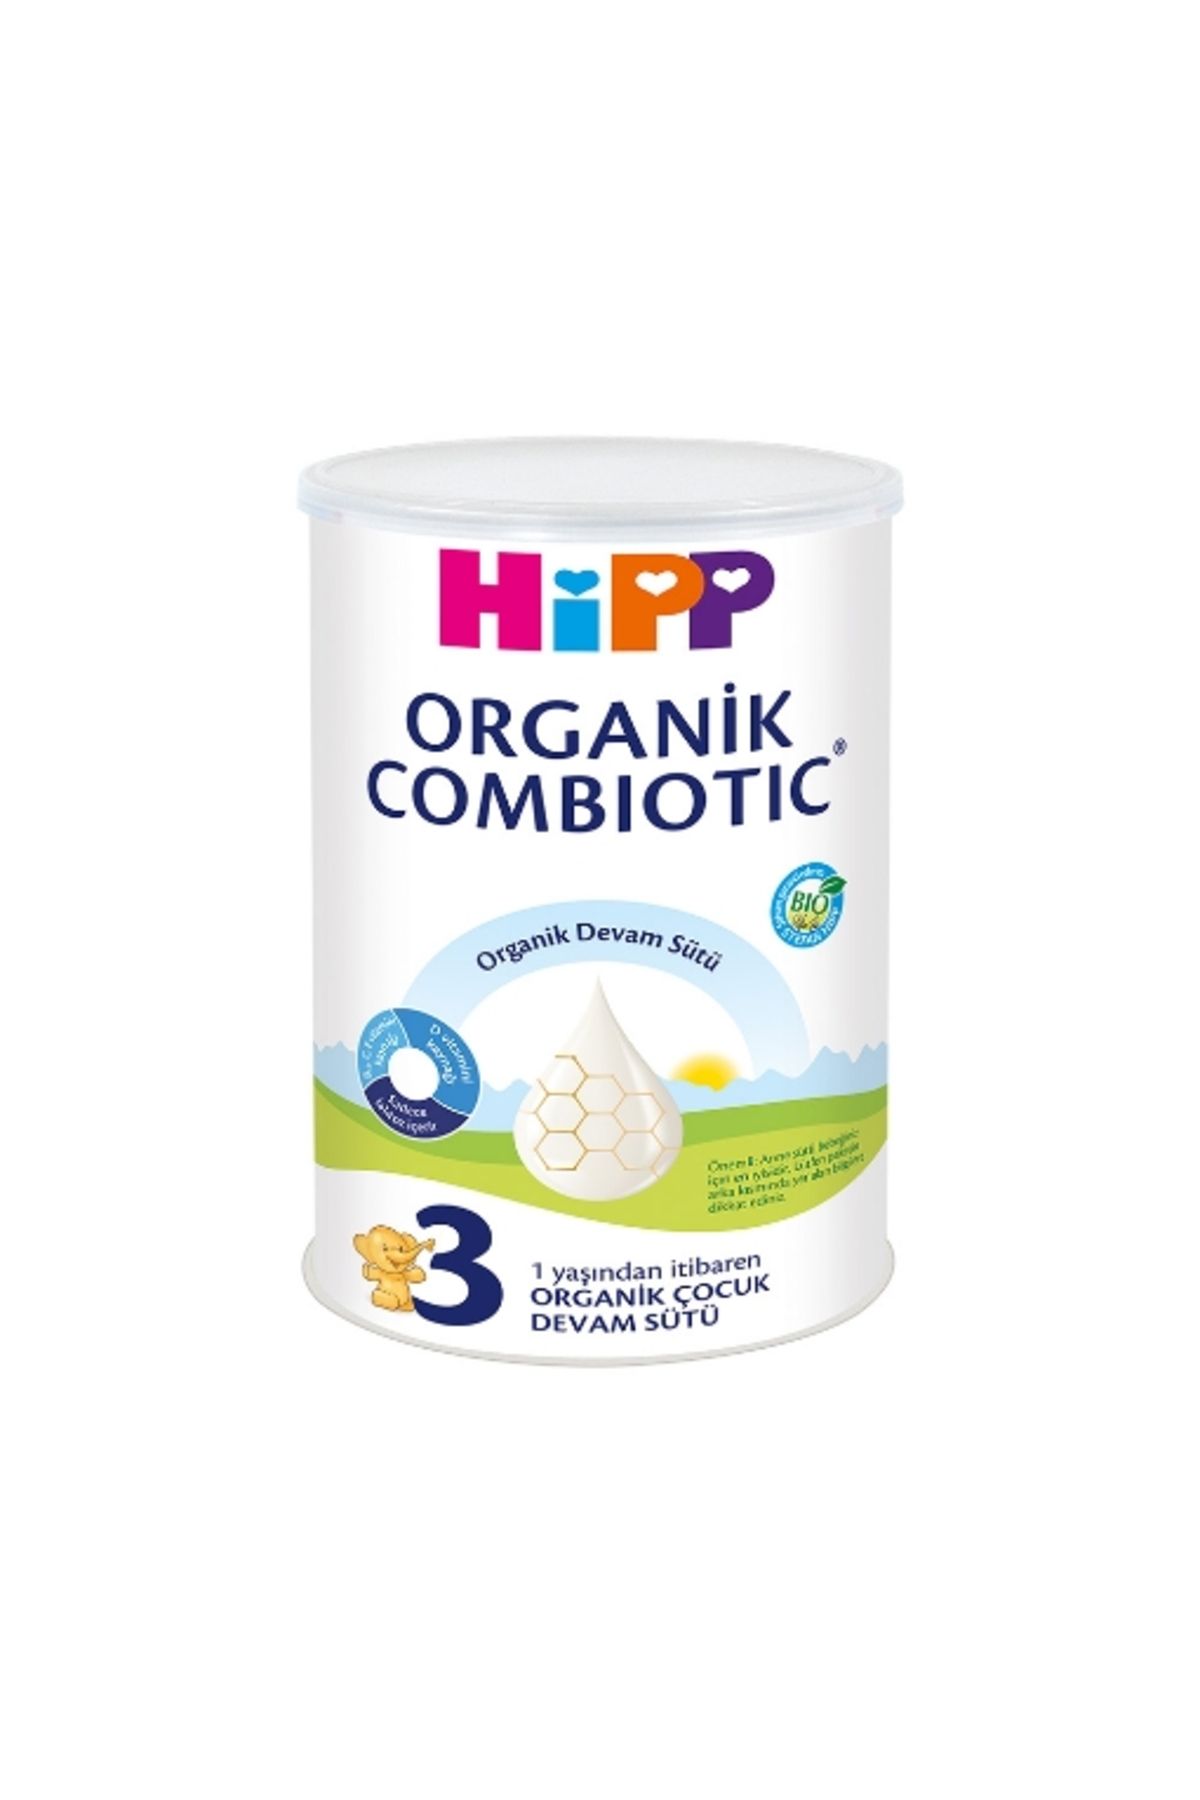 Hipp 3 Organik Combiotic Bebek Sütü 350 Gr. (12'Lİ)